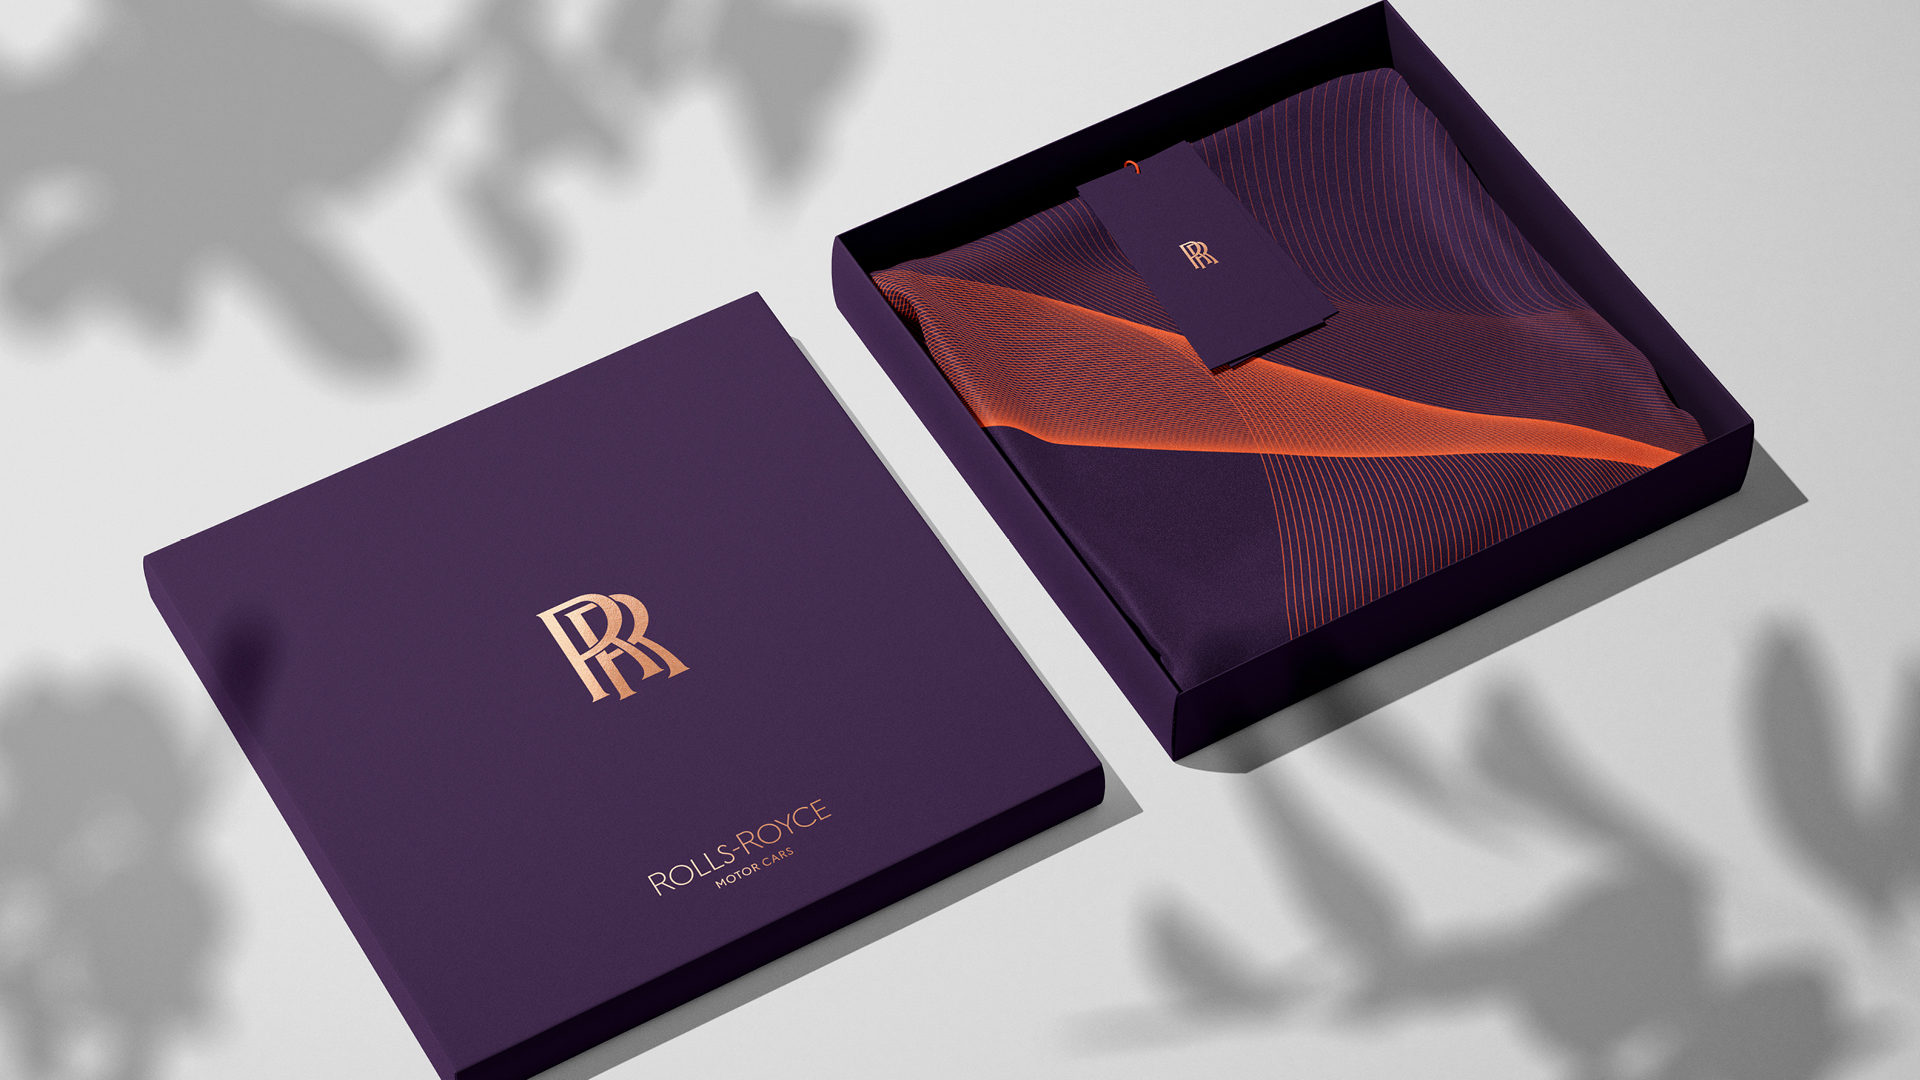 Rolls Royce brand design.